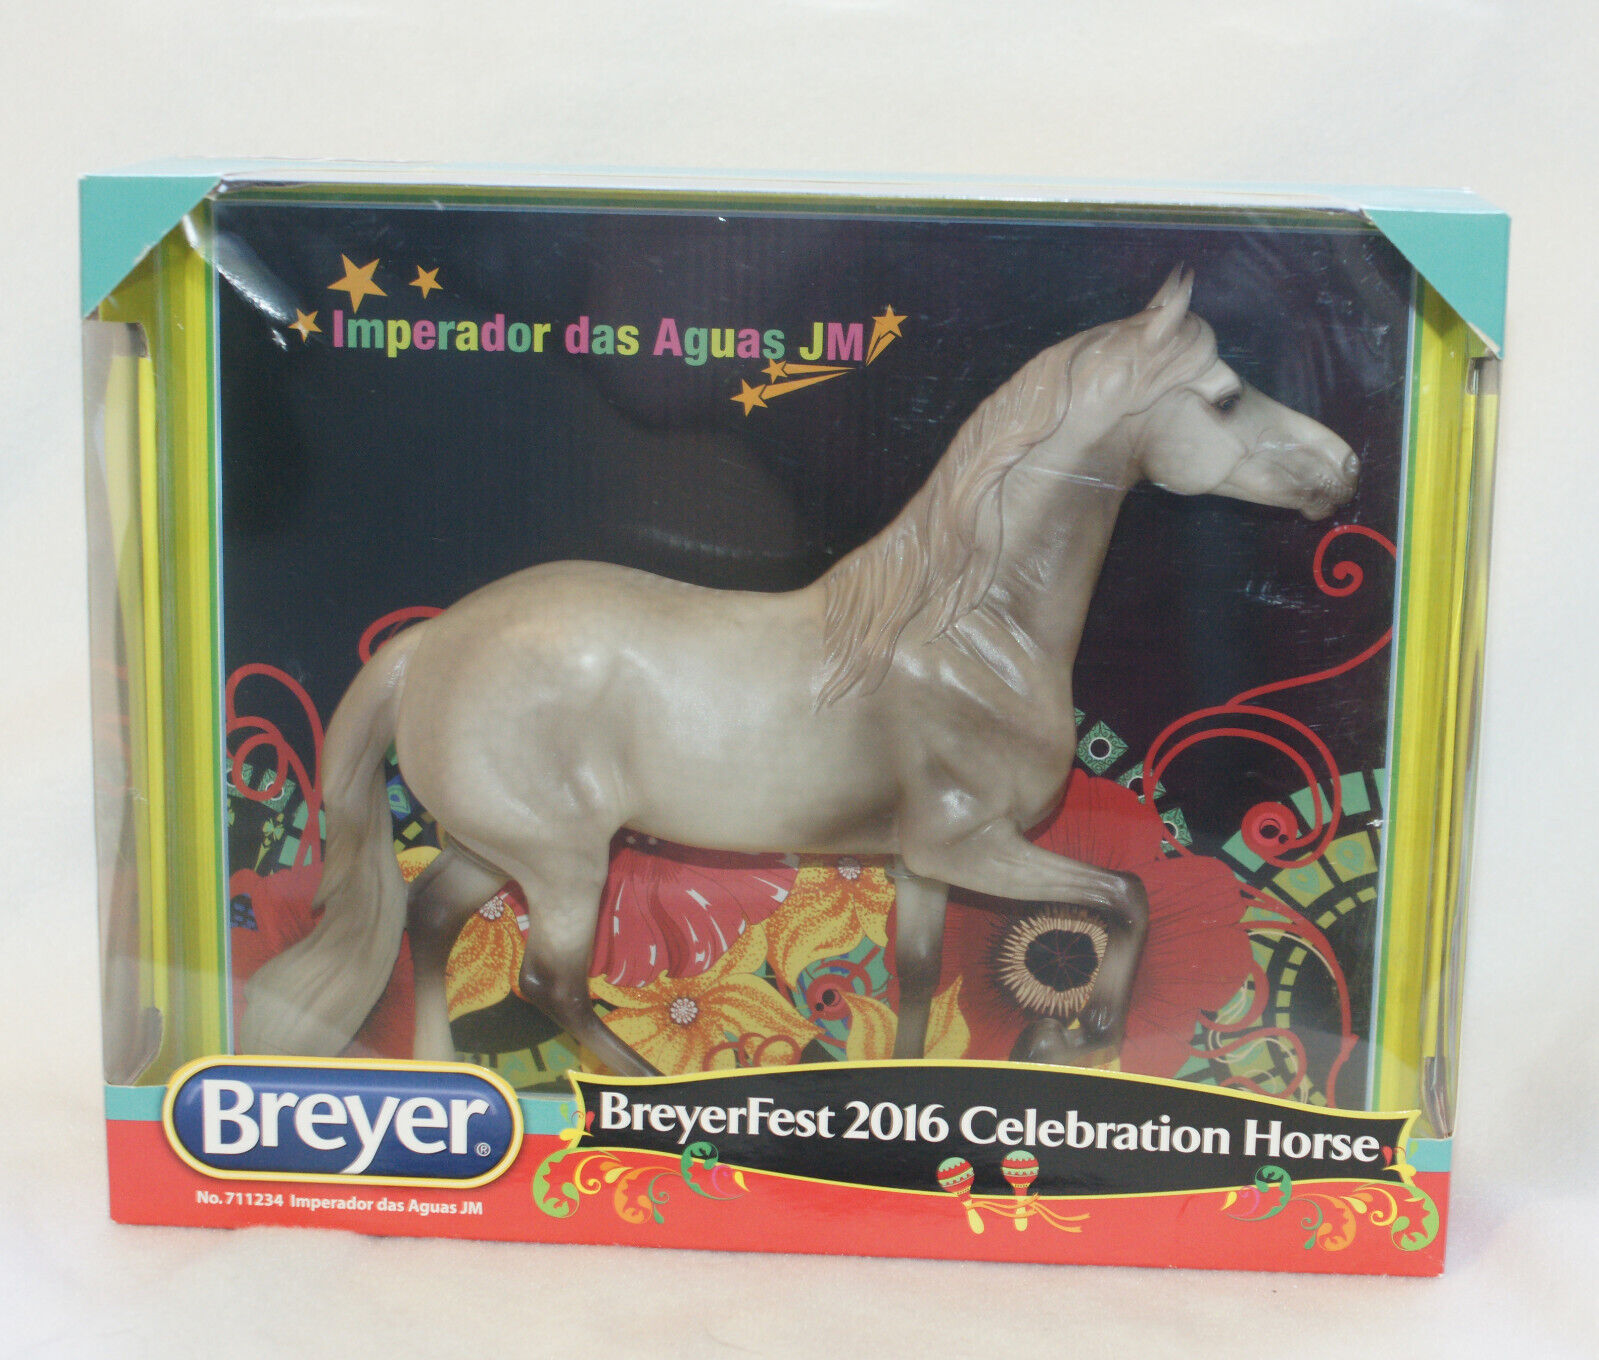 Breyer Breyerfest 2016 Celebration Horse